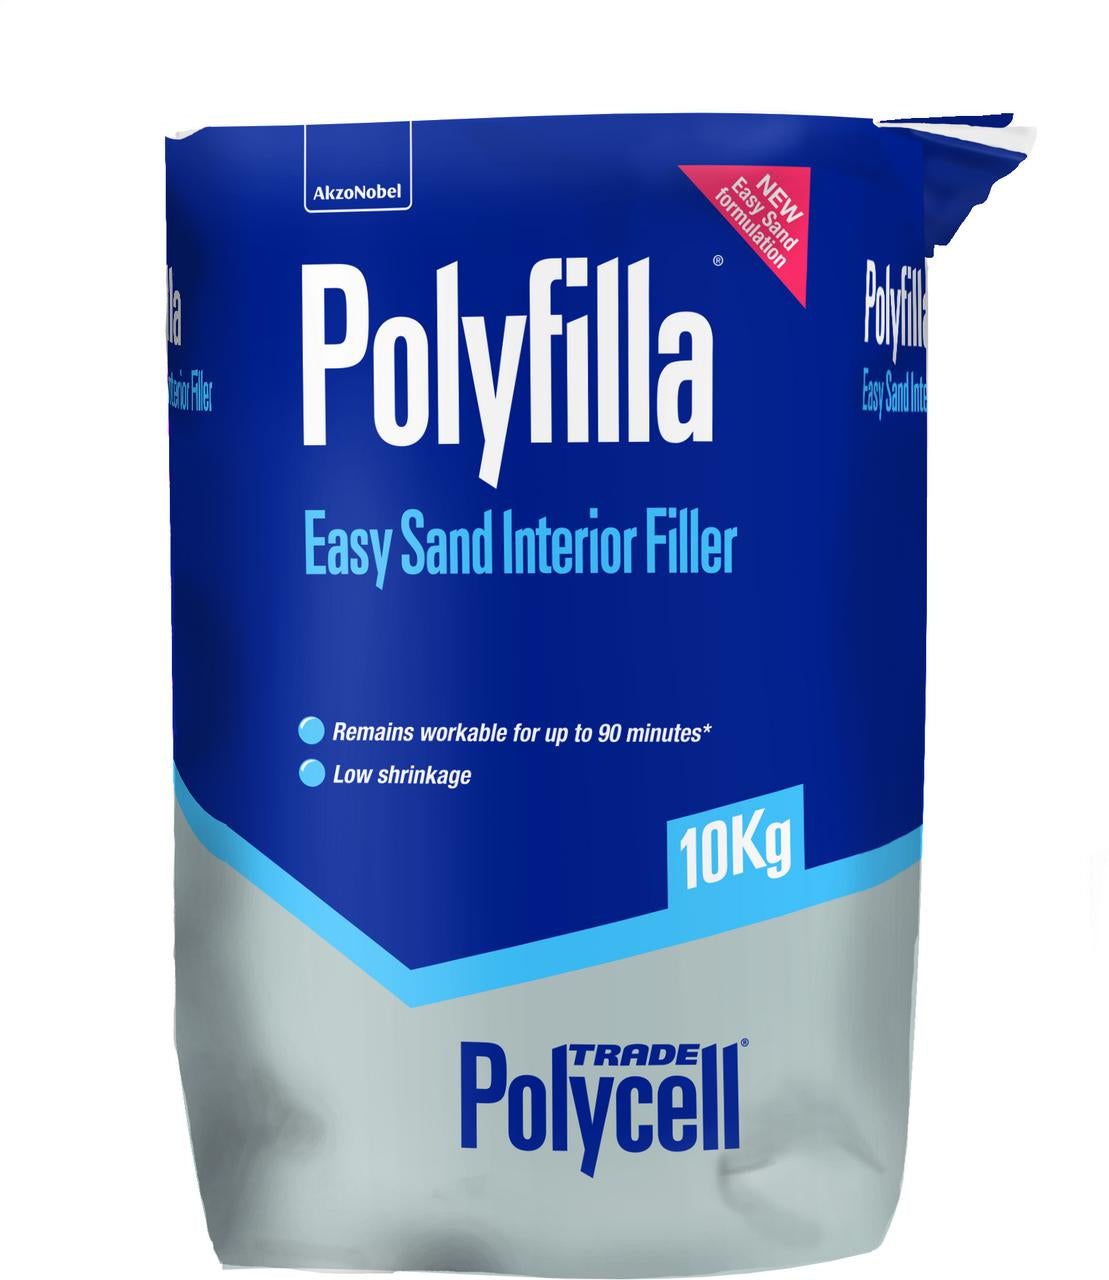 Polycell Trade Polyfilla Easy Sand Interior Filler 10kg